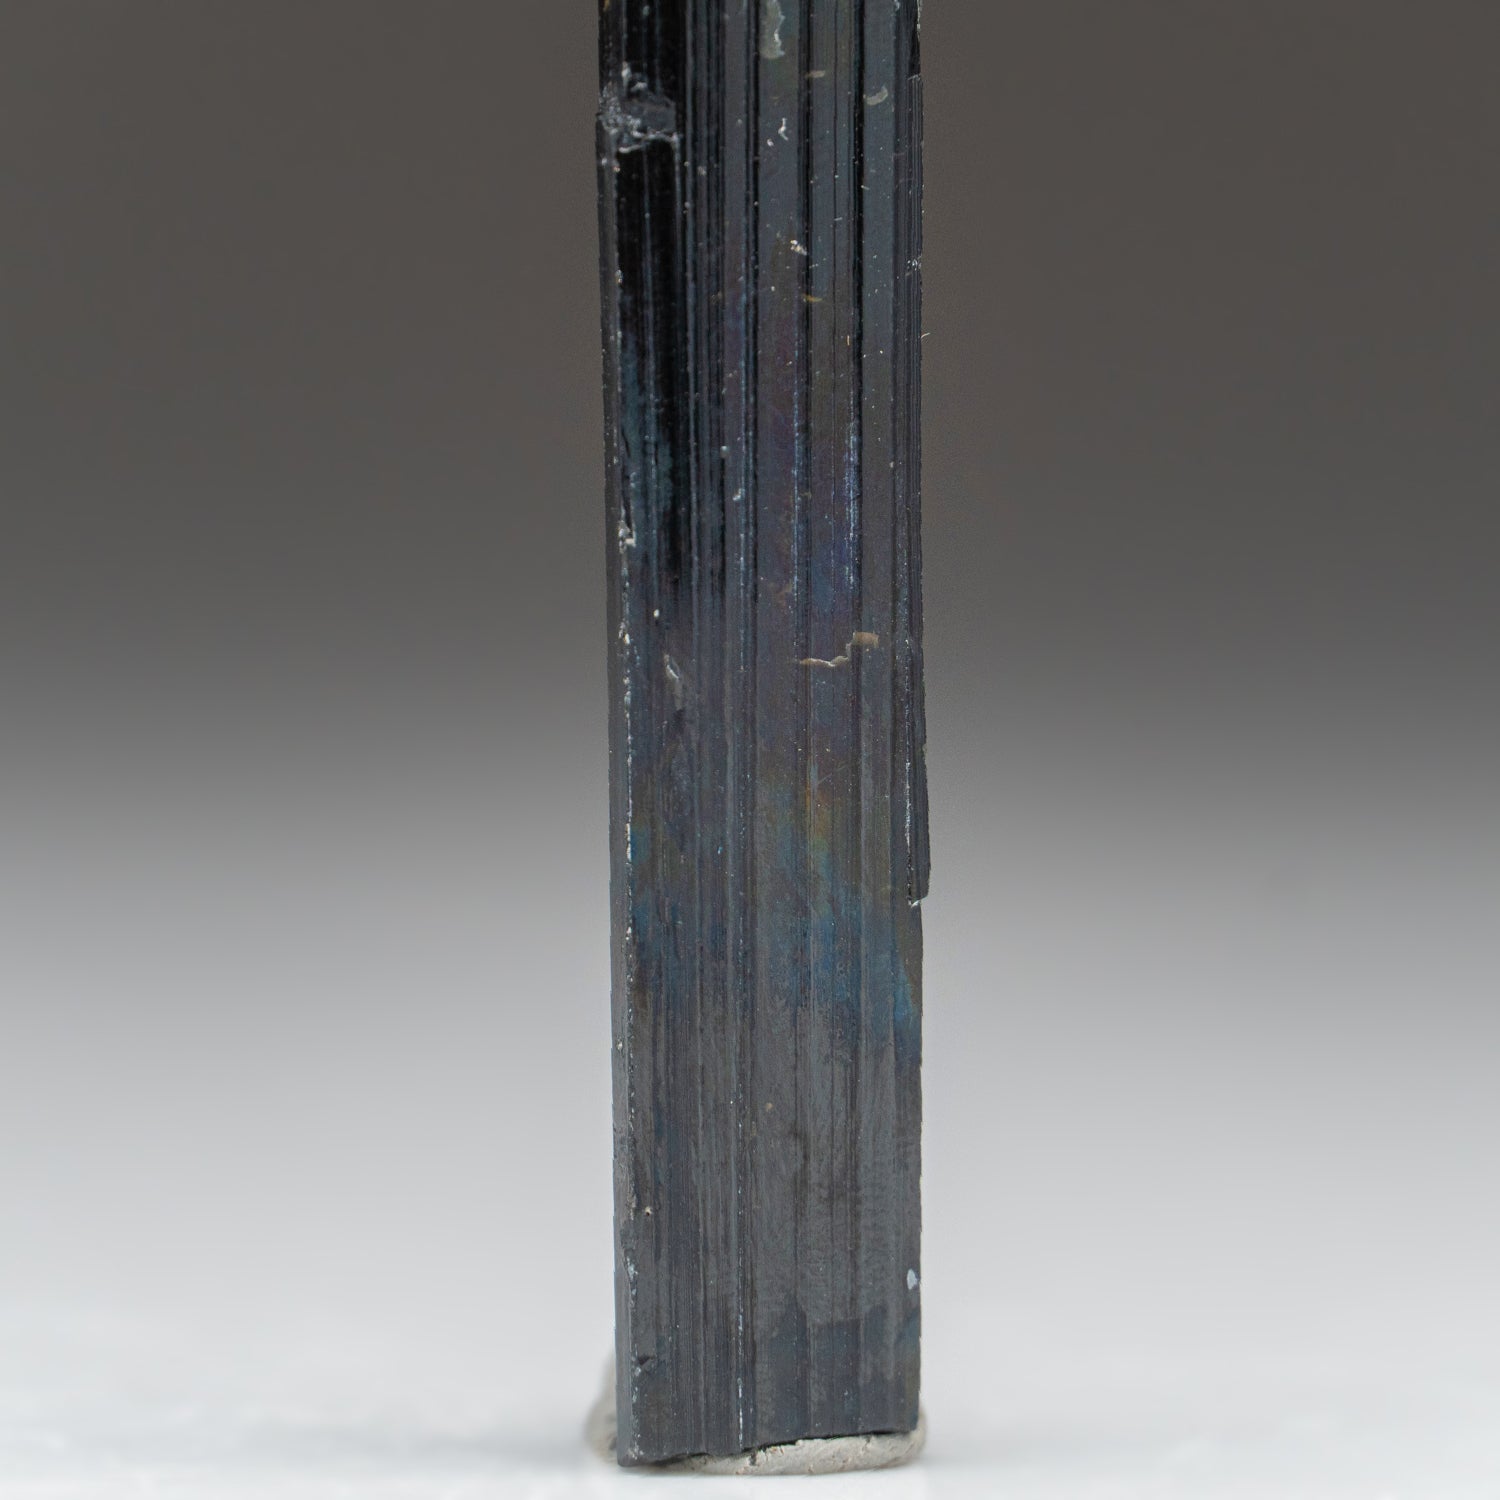 Black Tourmaline Crystal From Brazil (22.9 grams)